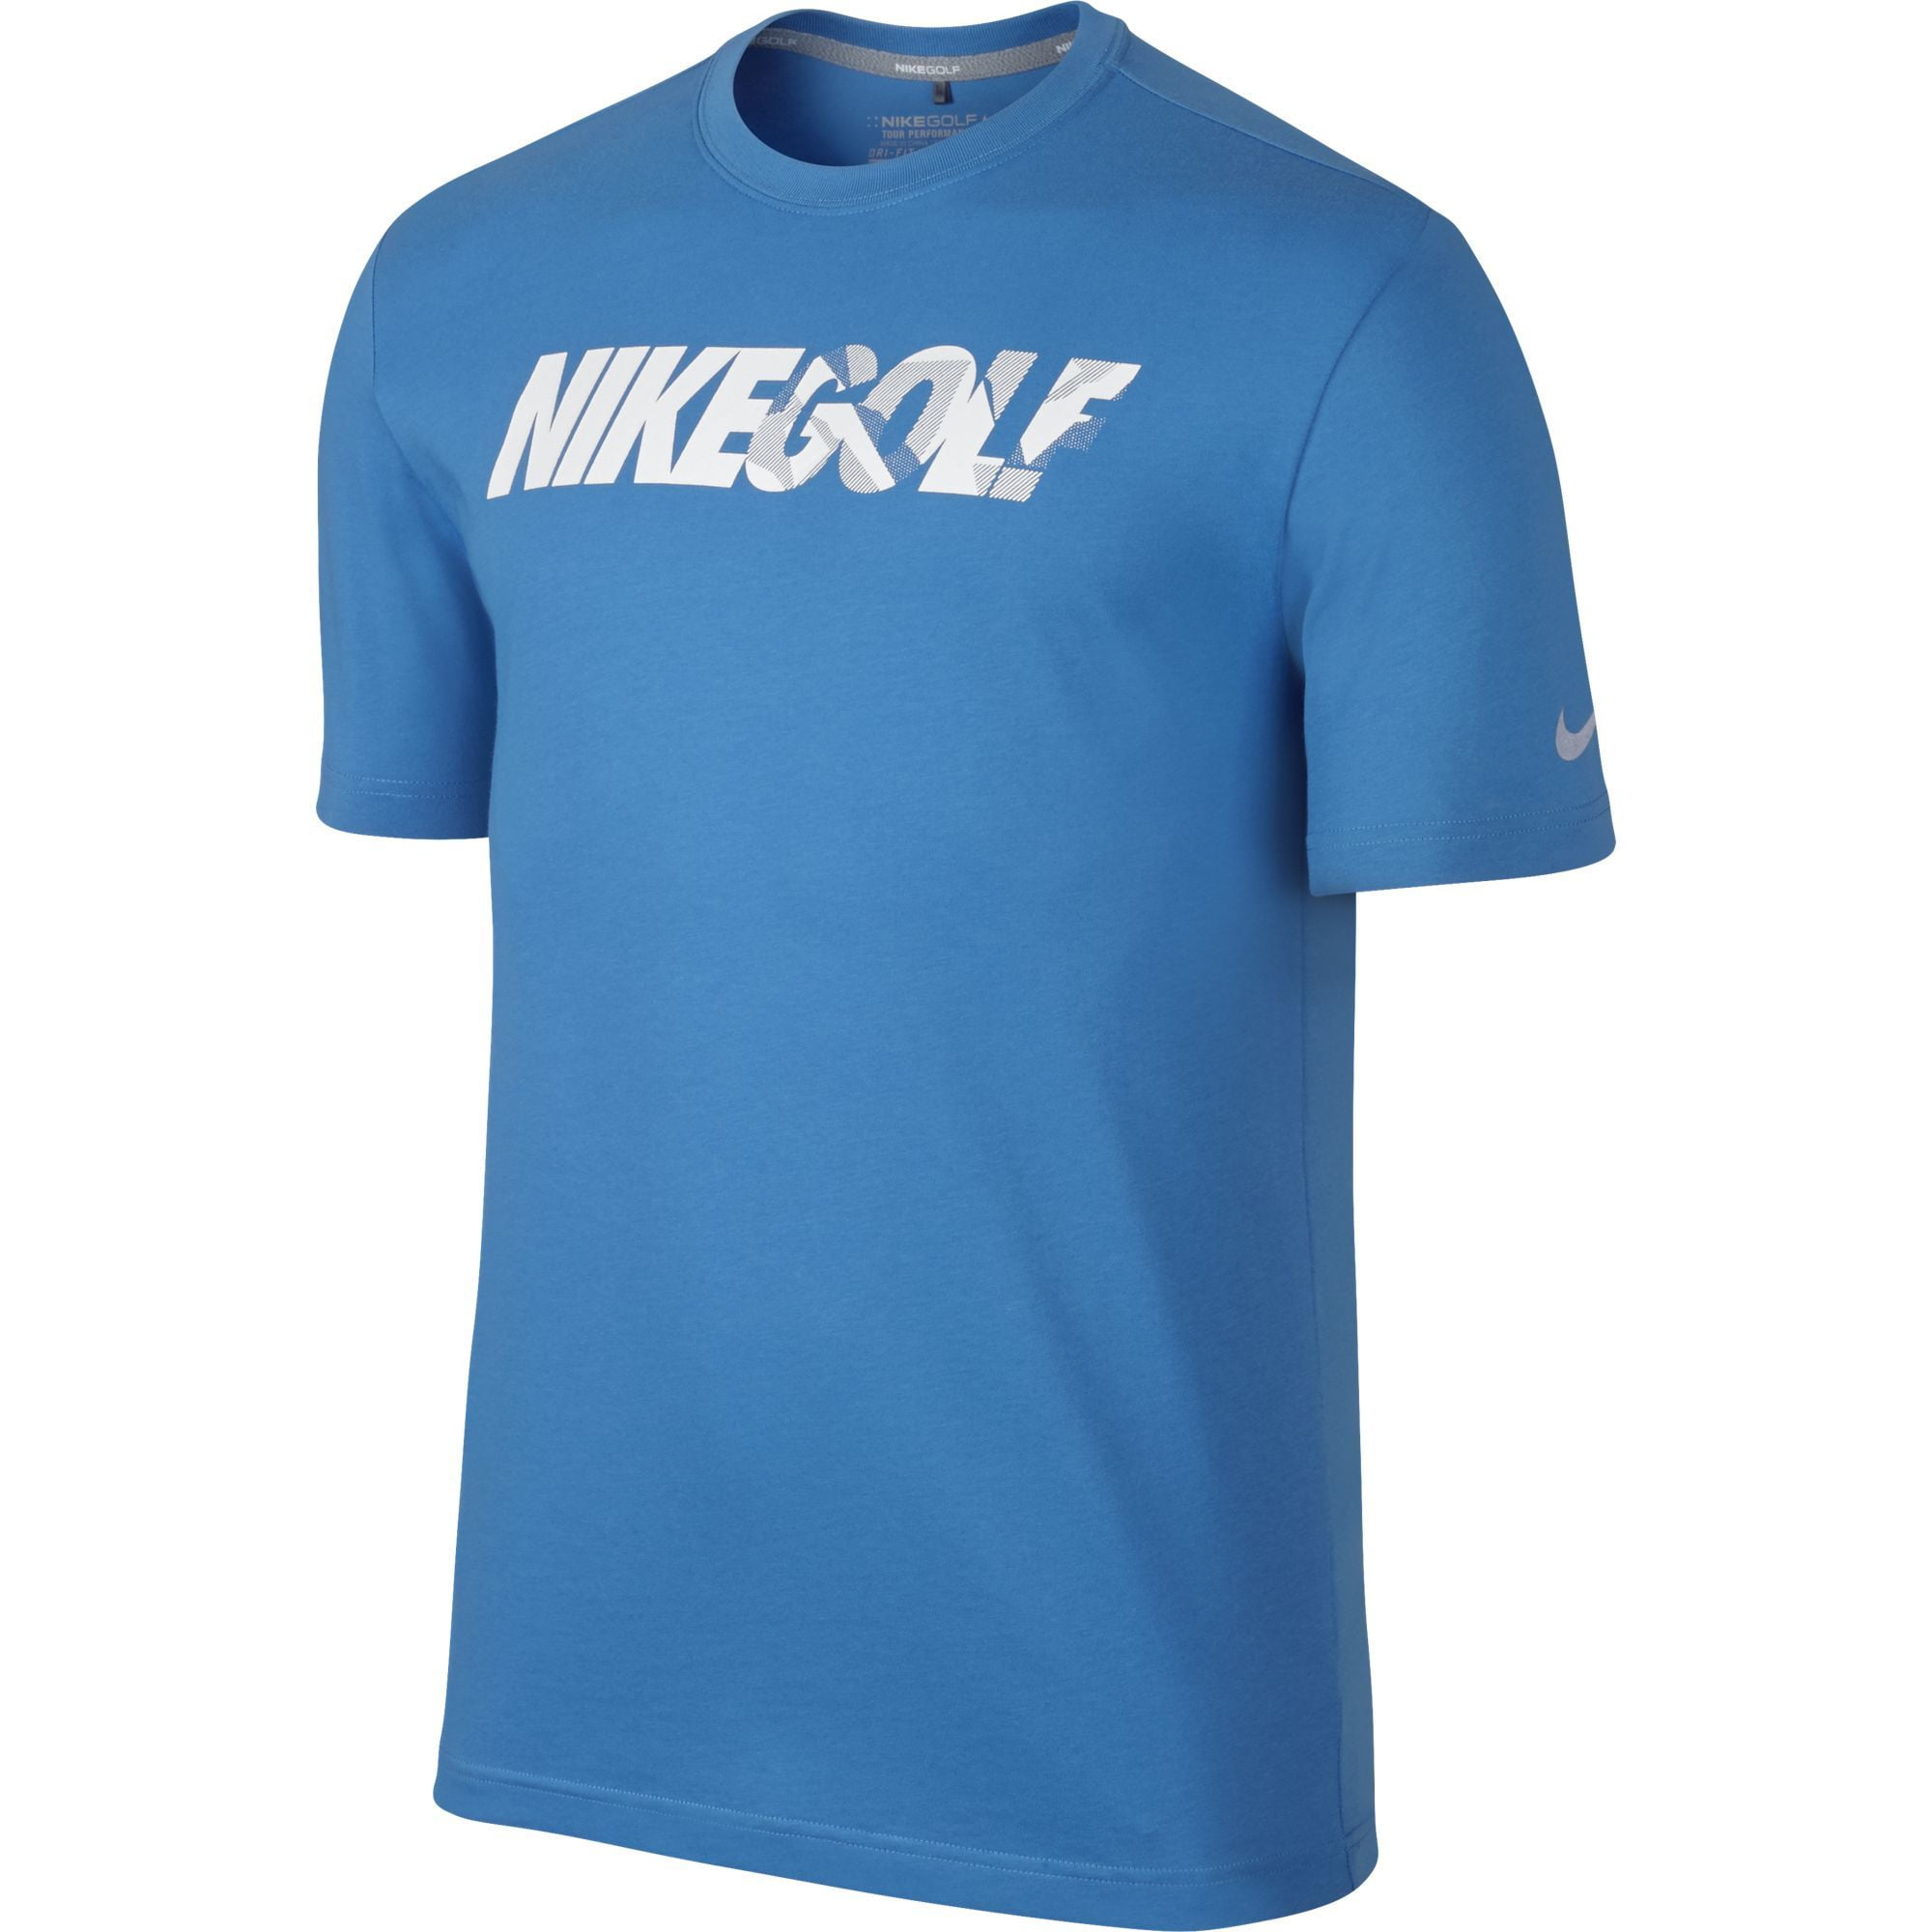 Nike - NEW Nike Golf Camo Tee Shirt Light Blue Men's (L) - Walmart.com ...